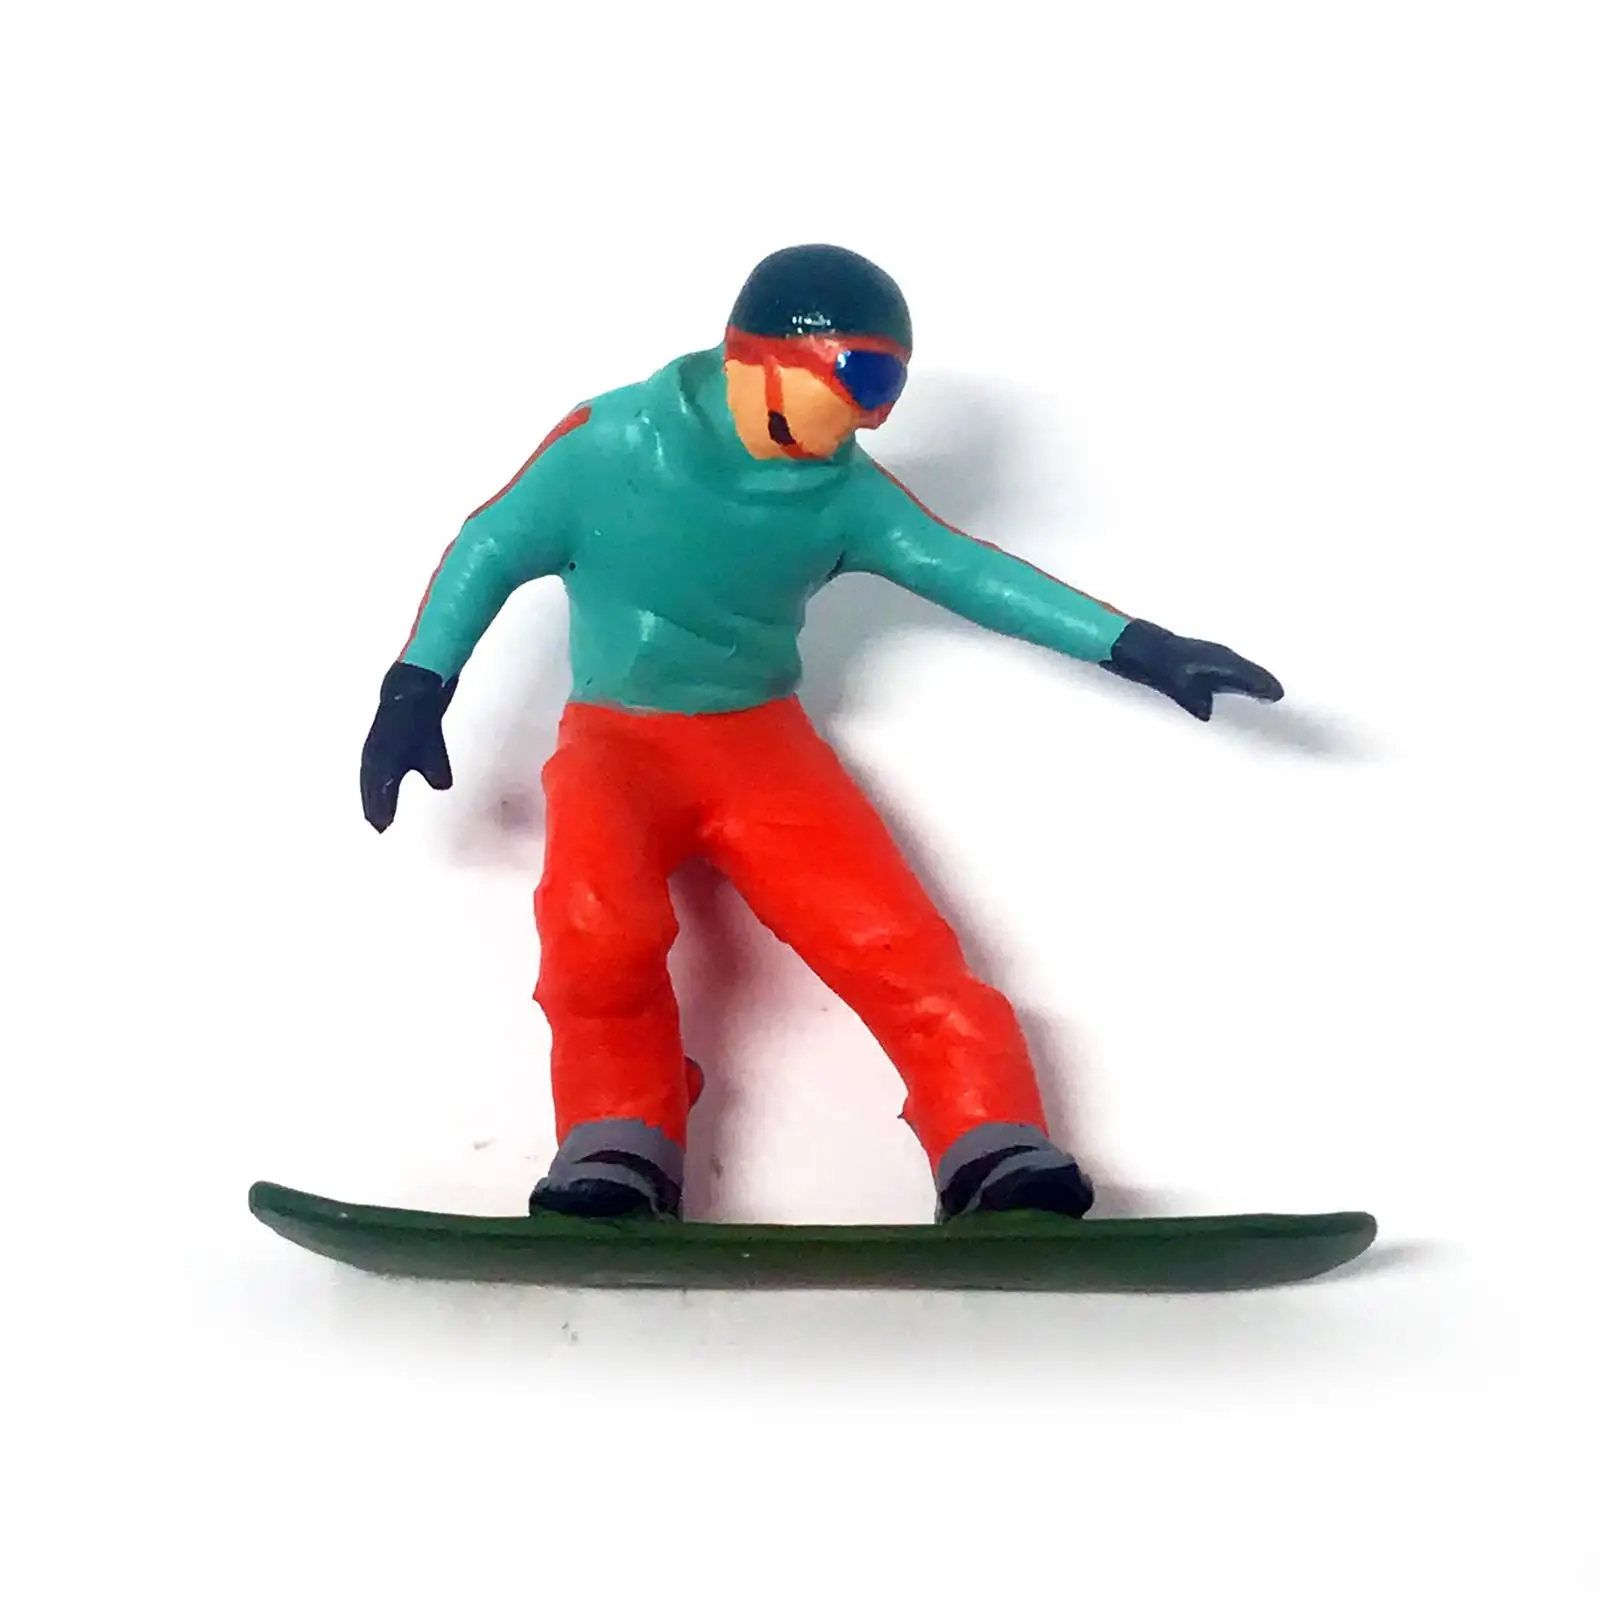 3 Pieces 1/64 Miniature Model Skiing Figures Micro Landscape Decoration